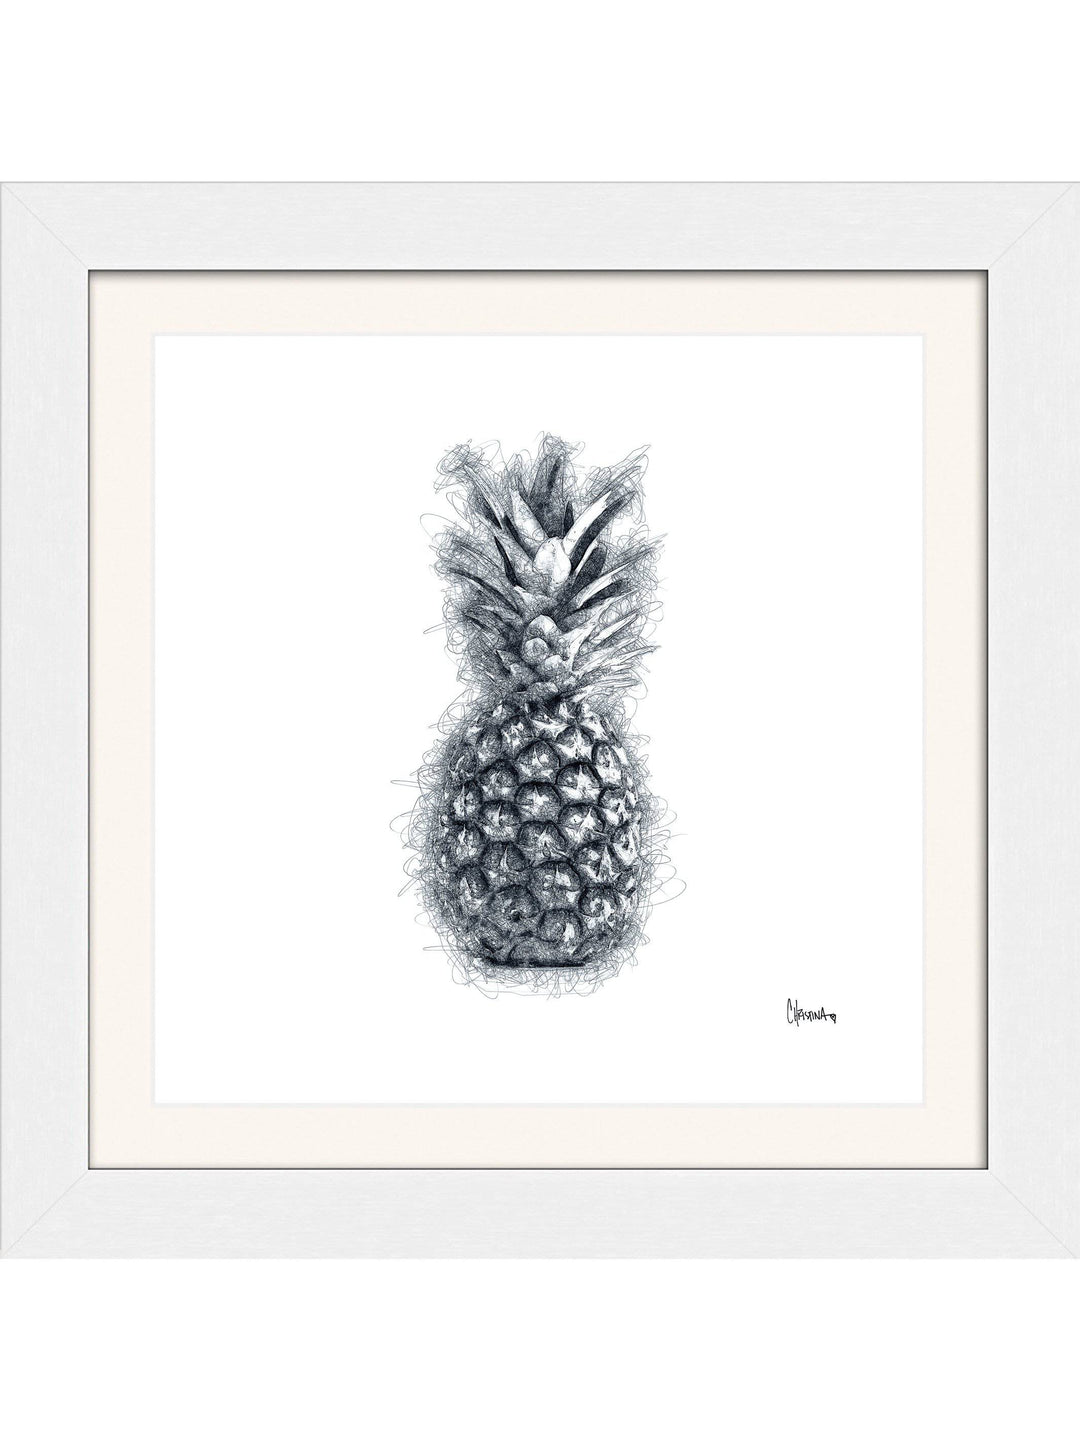 Pineapple Square Edition - Square Editions - Christina Stefani - Stefani Fine Art